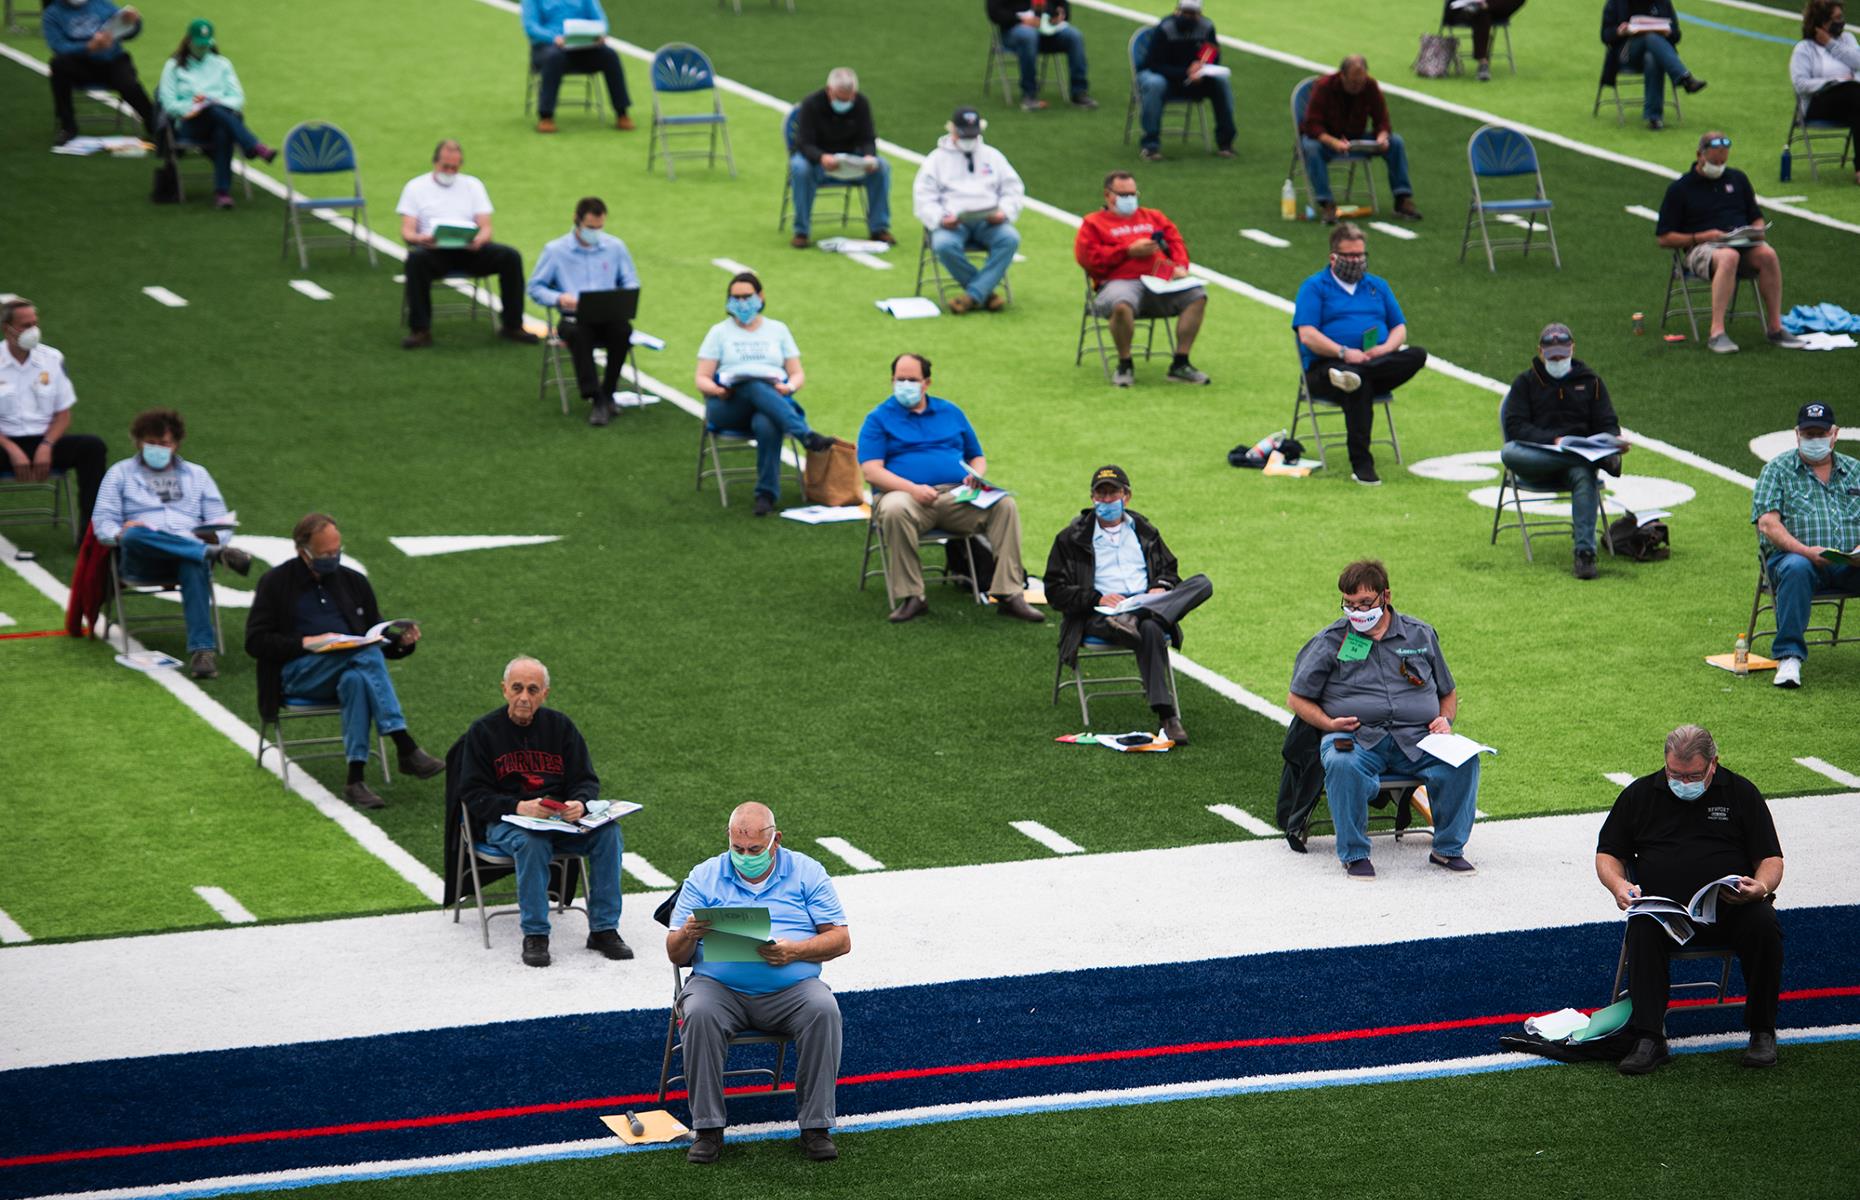 Worcester, Massachusetts: A town hall meeting on a football field